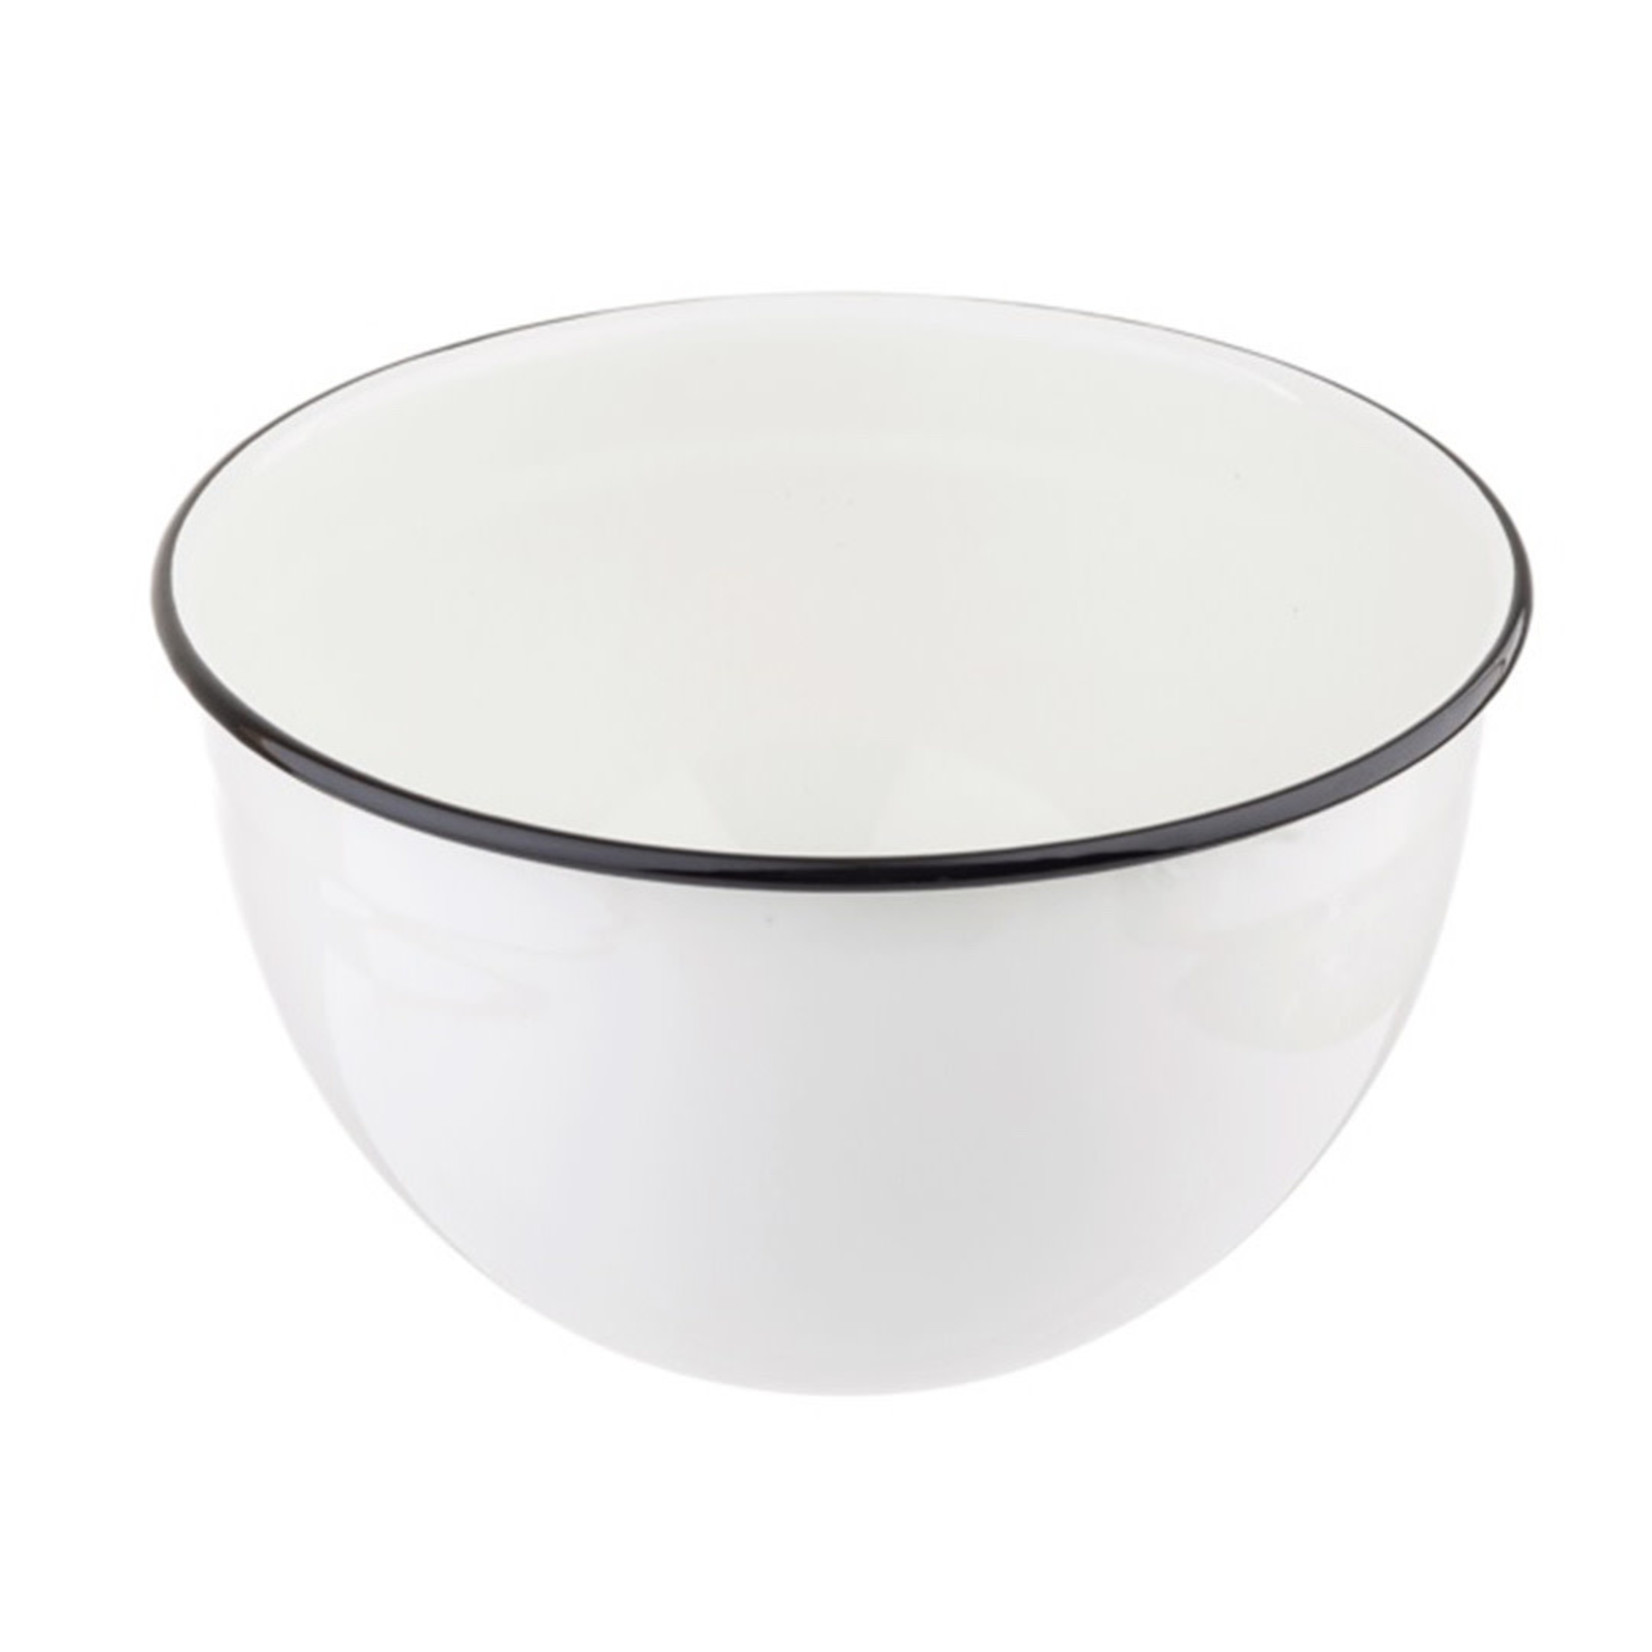 https://cdn.shoplightspeed.com/shops/652247/files/43509004/1652x1652x1/tablecraft-enamelware-collectiontm-mixing-bowls-se.jpg